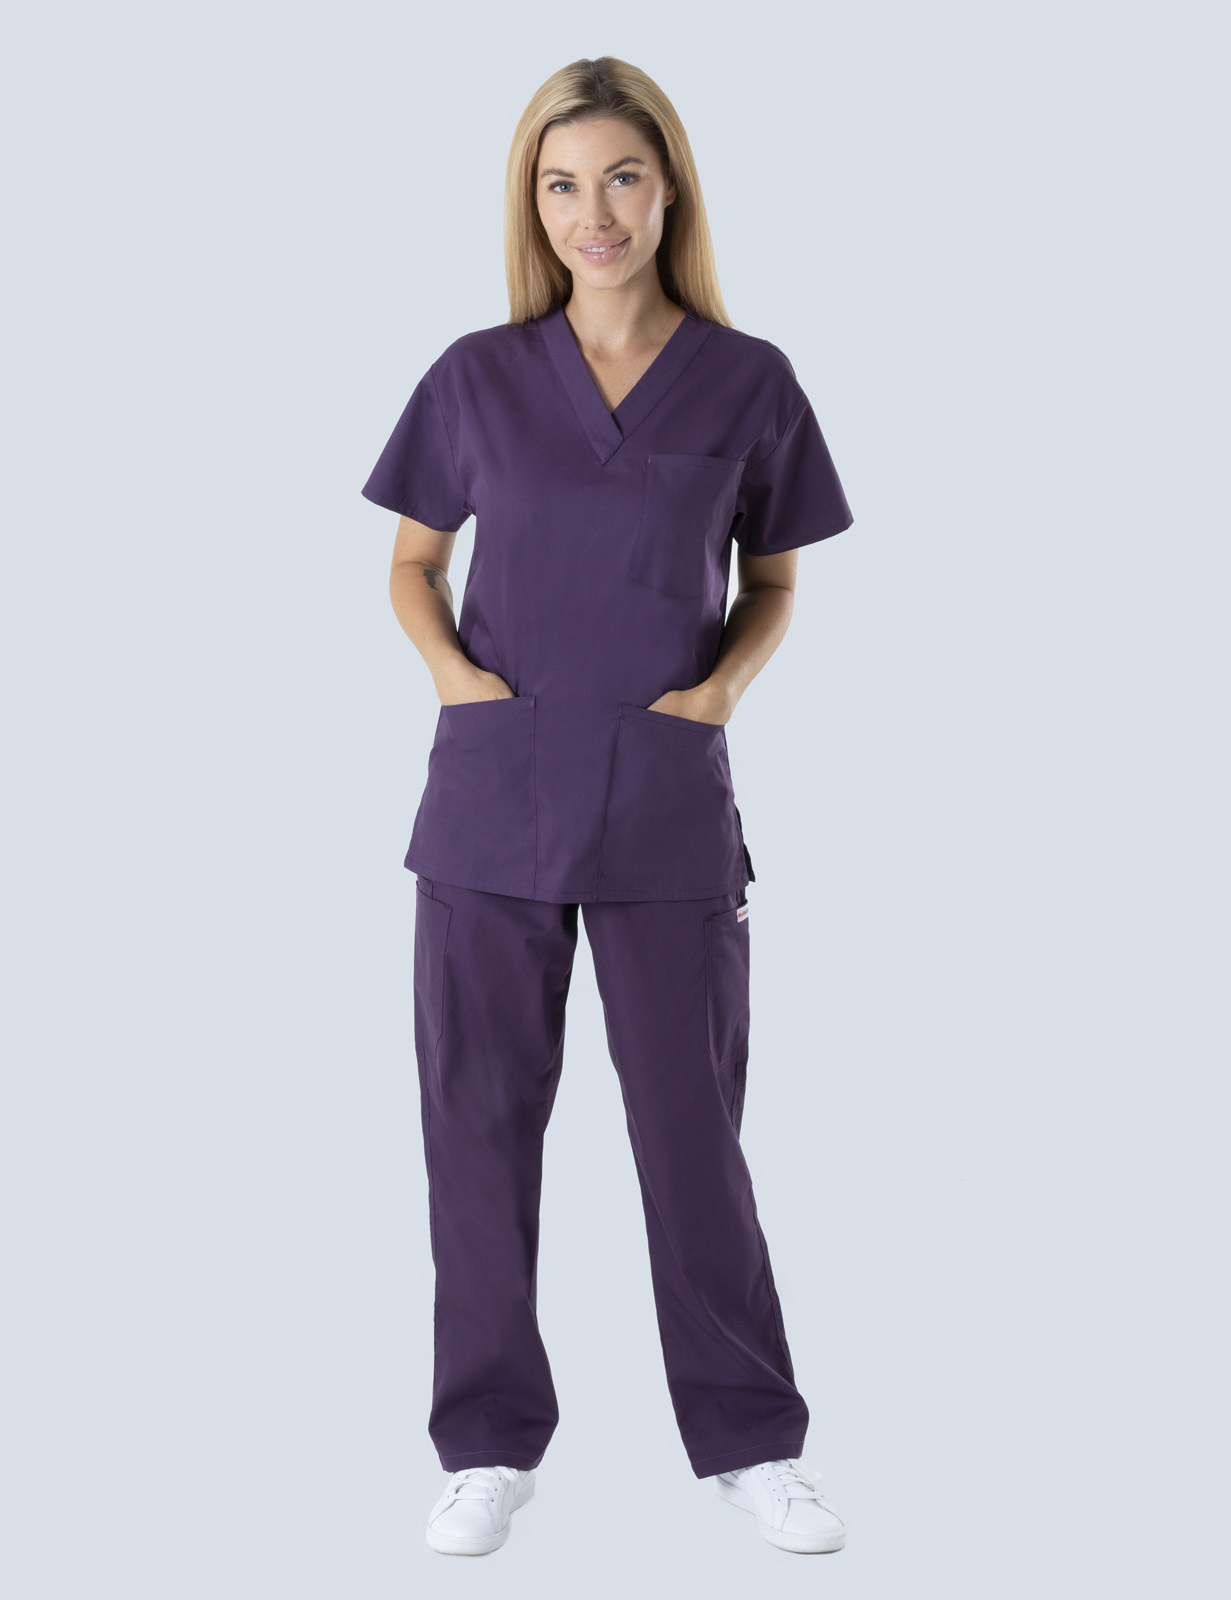 Kilcoy Hospital - Enrolled Nurse (4 Pocket Scrub Top and Cargo Pants in Aubergine incl Logos)